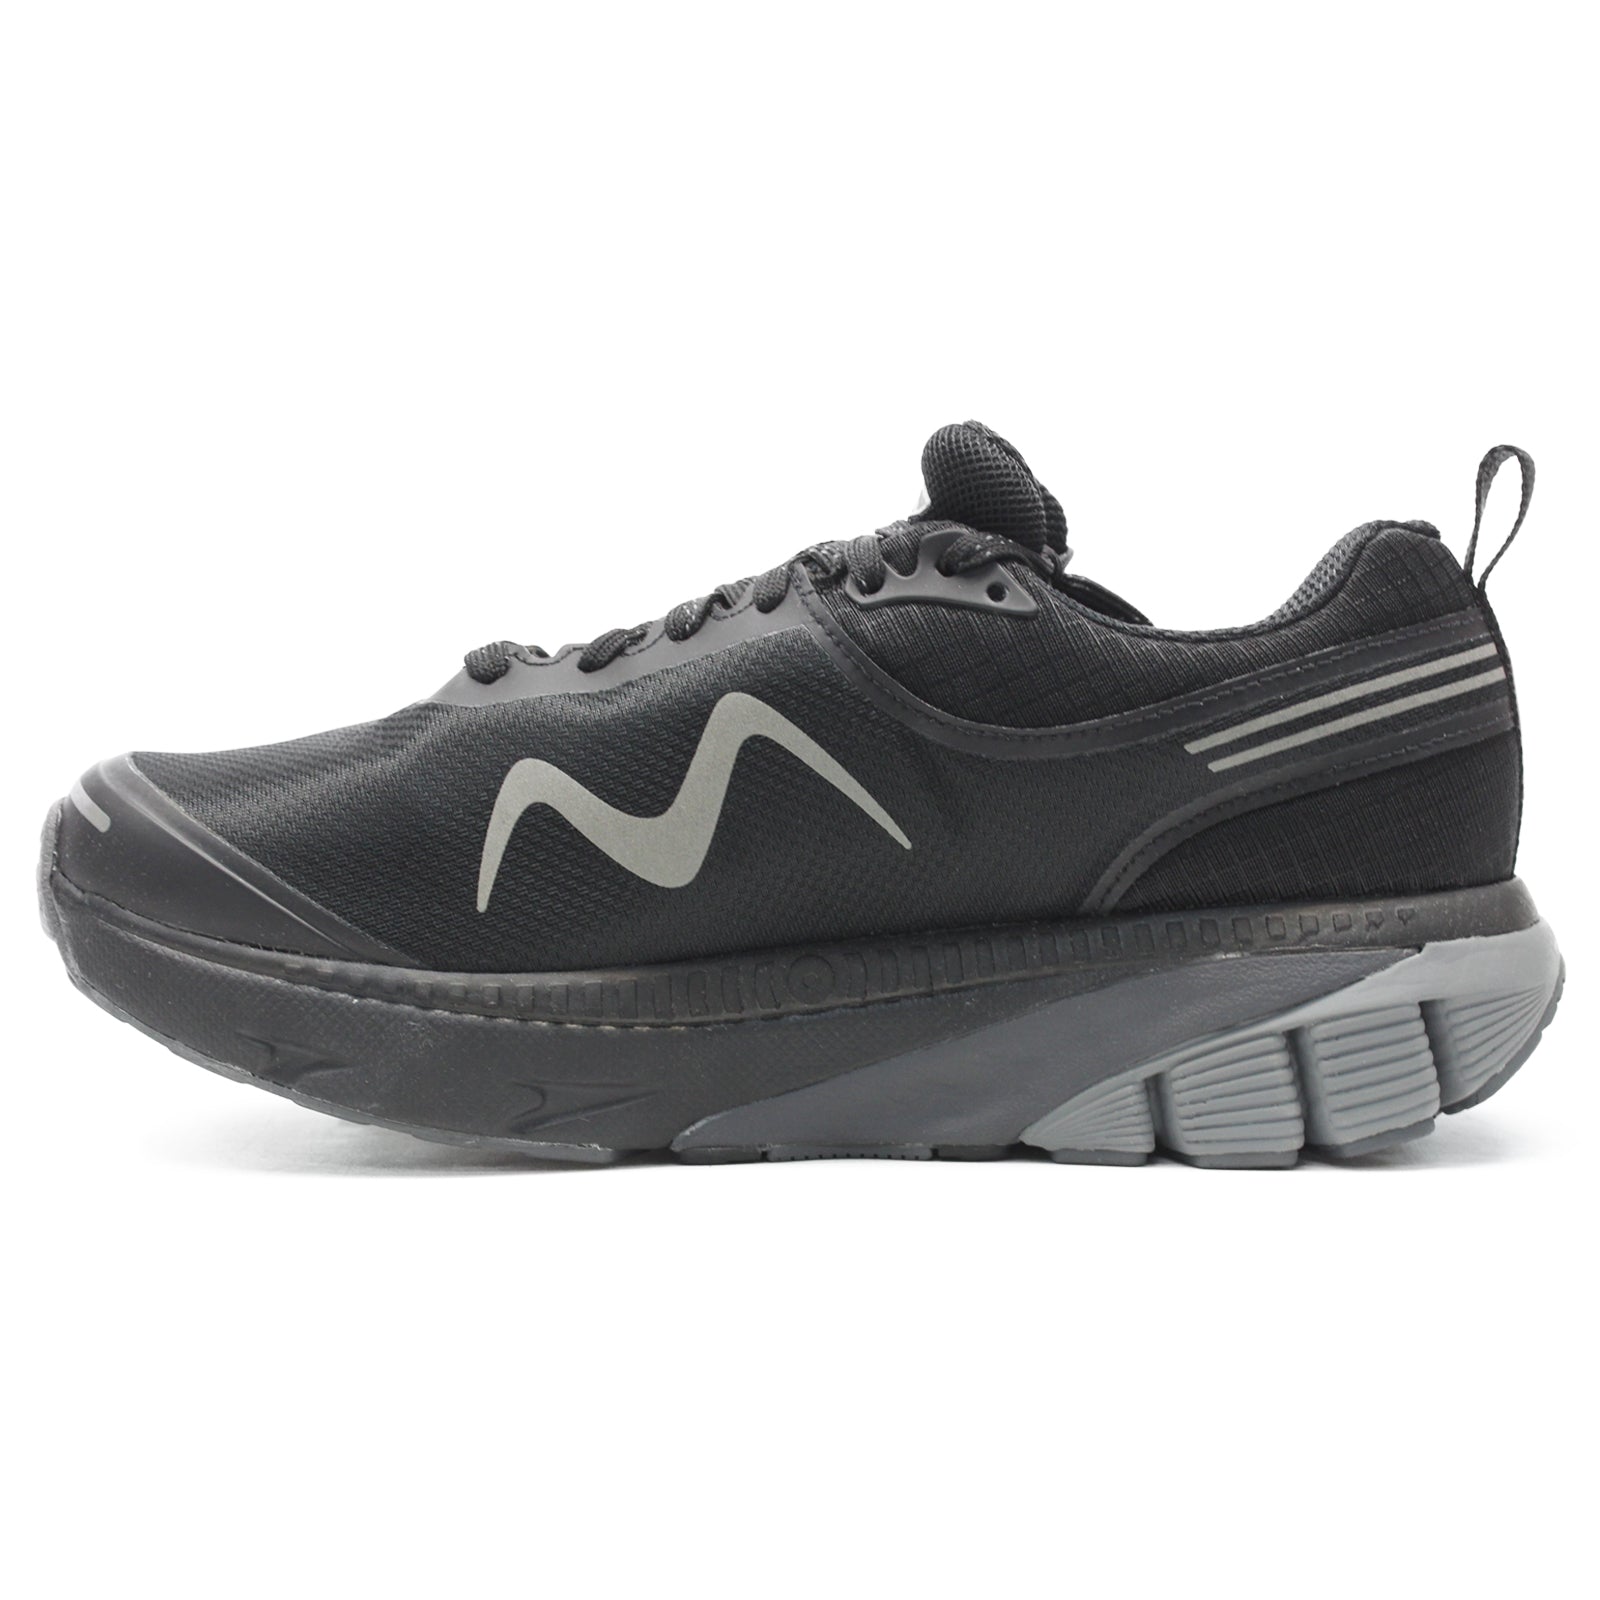 MBT MTR-1600 GTX Mesh Men's Running Sneakers#color_black